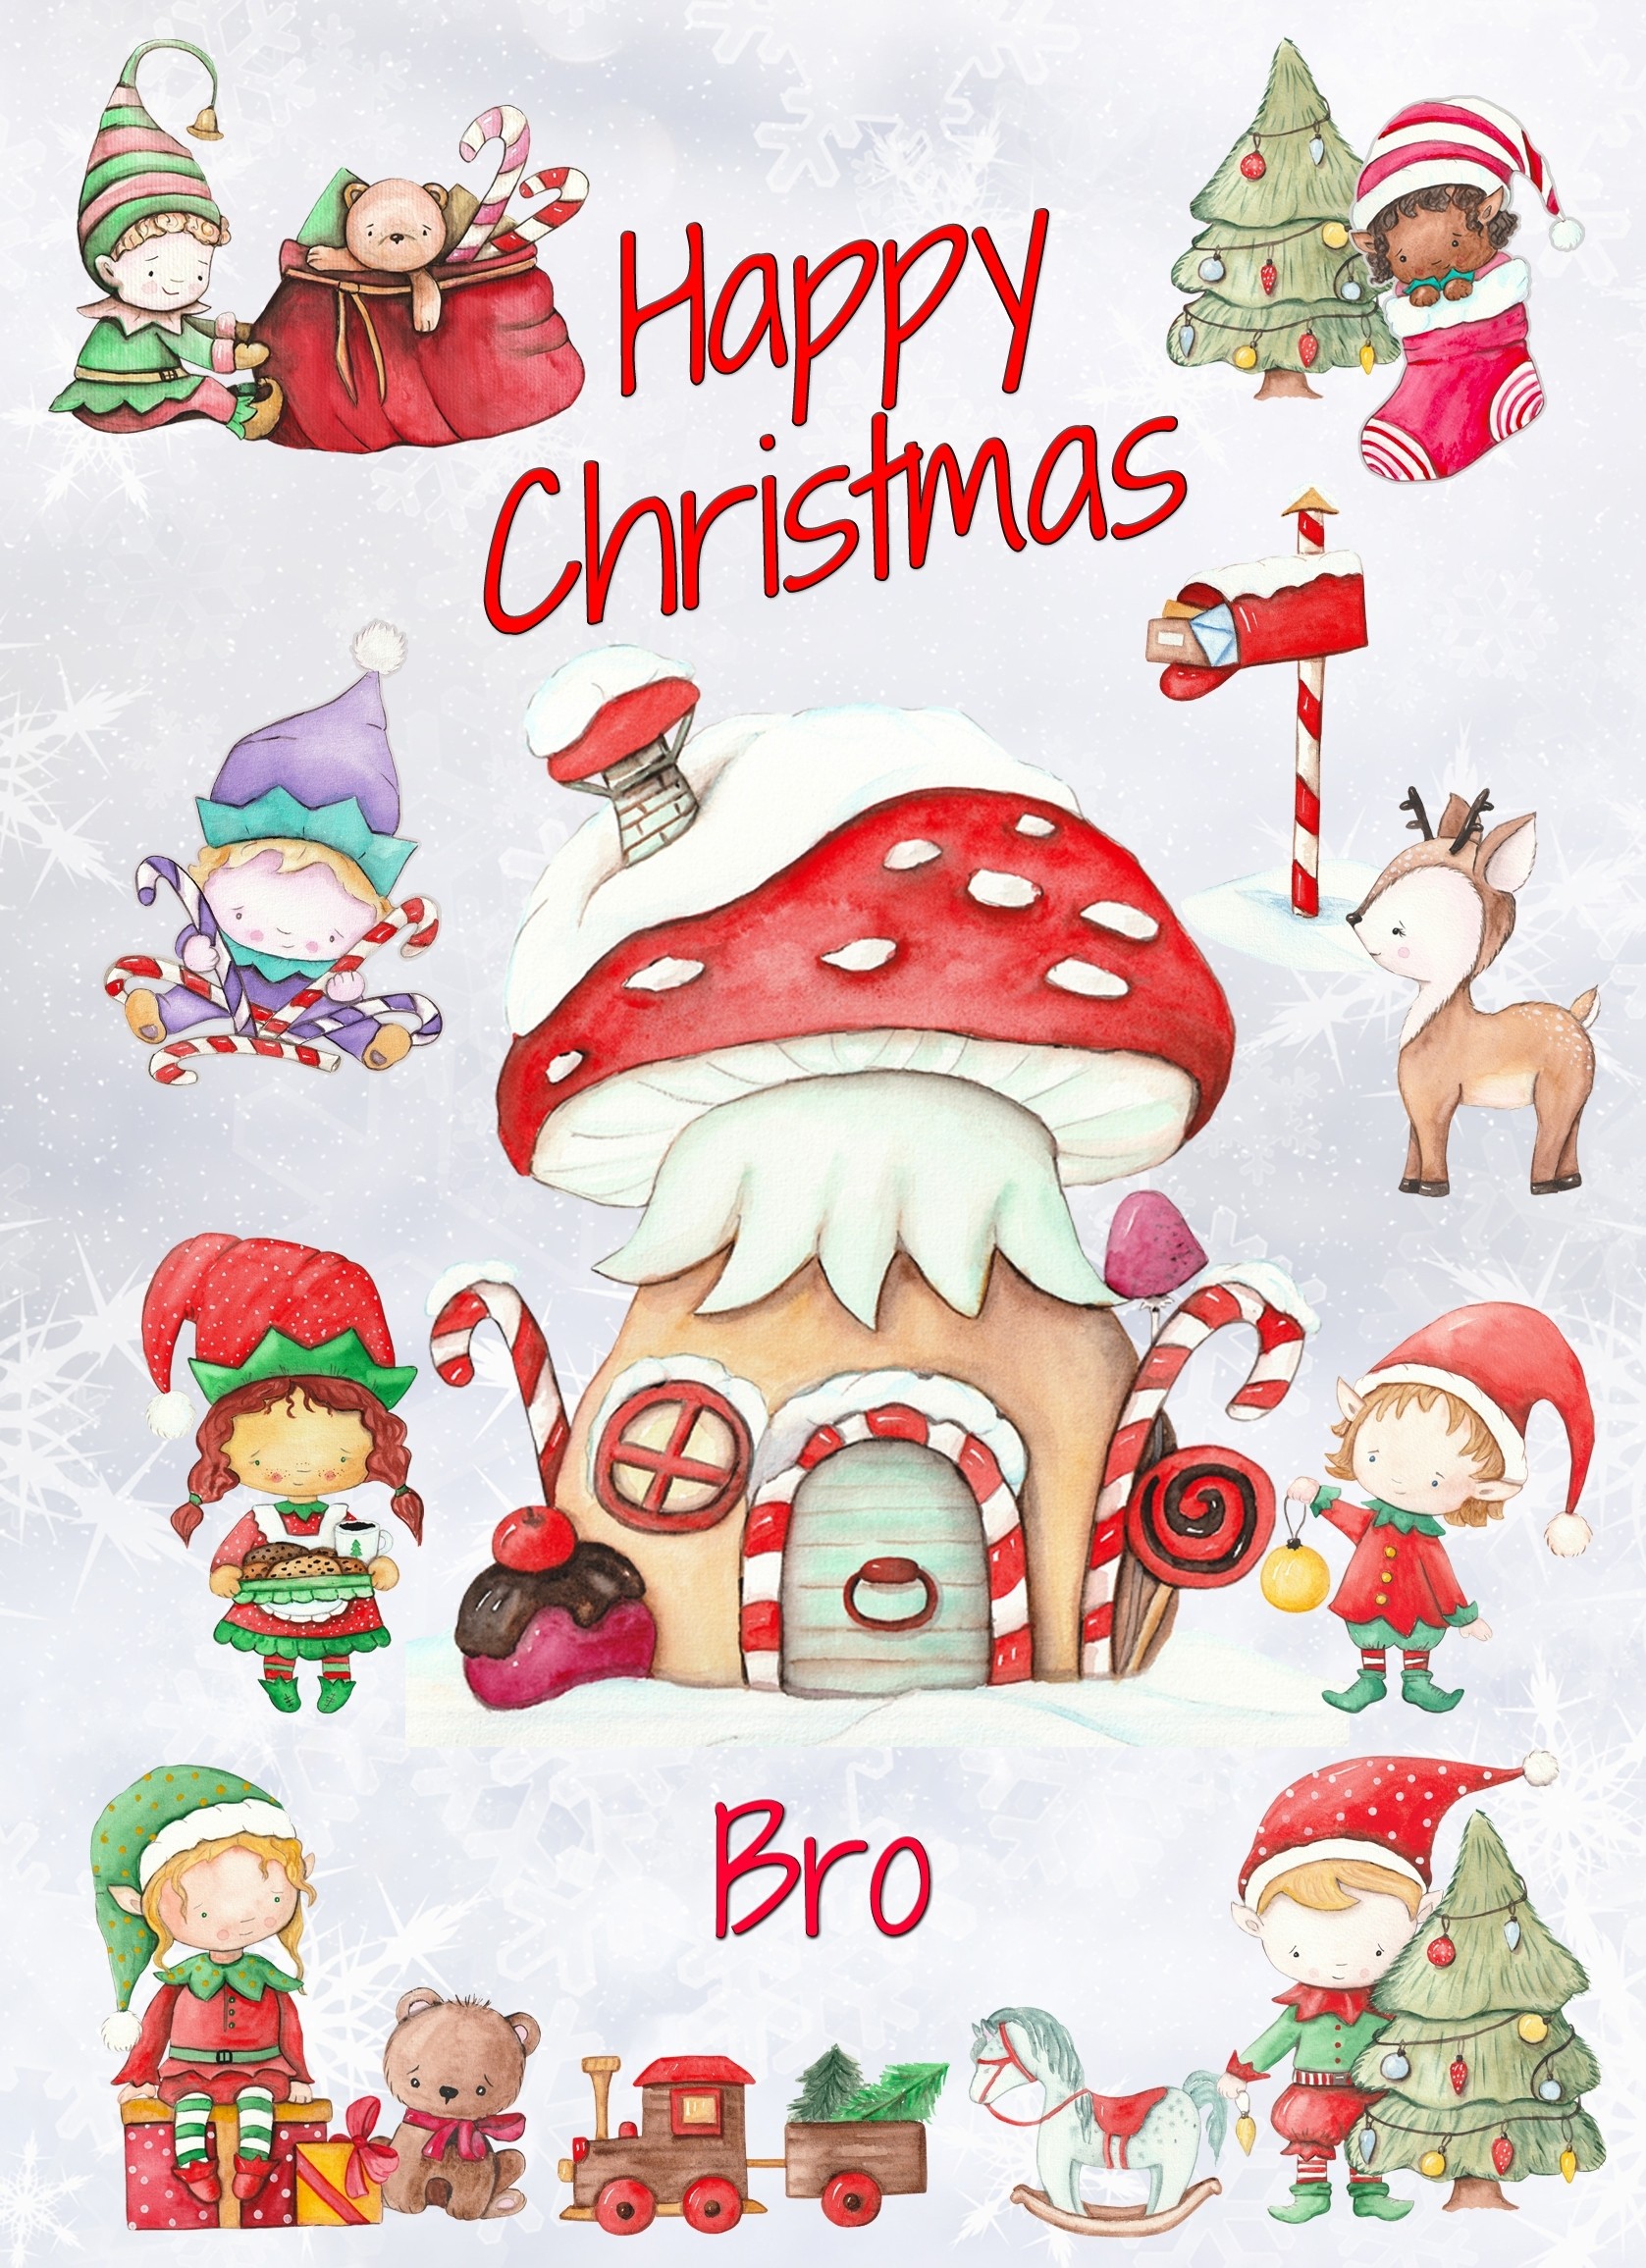 Christmas Card For Bro (Elf, White)